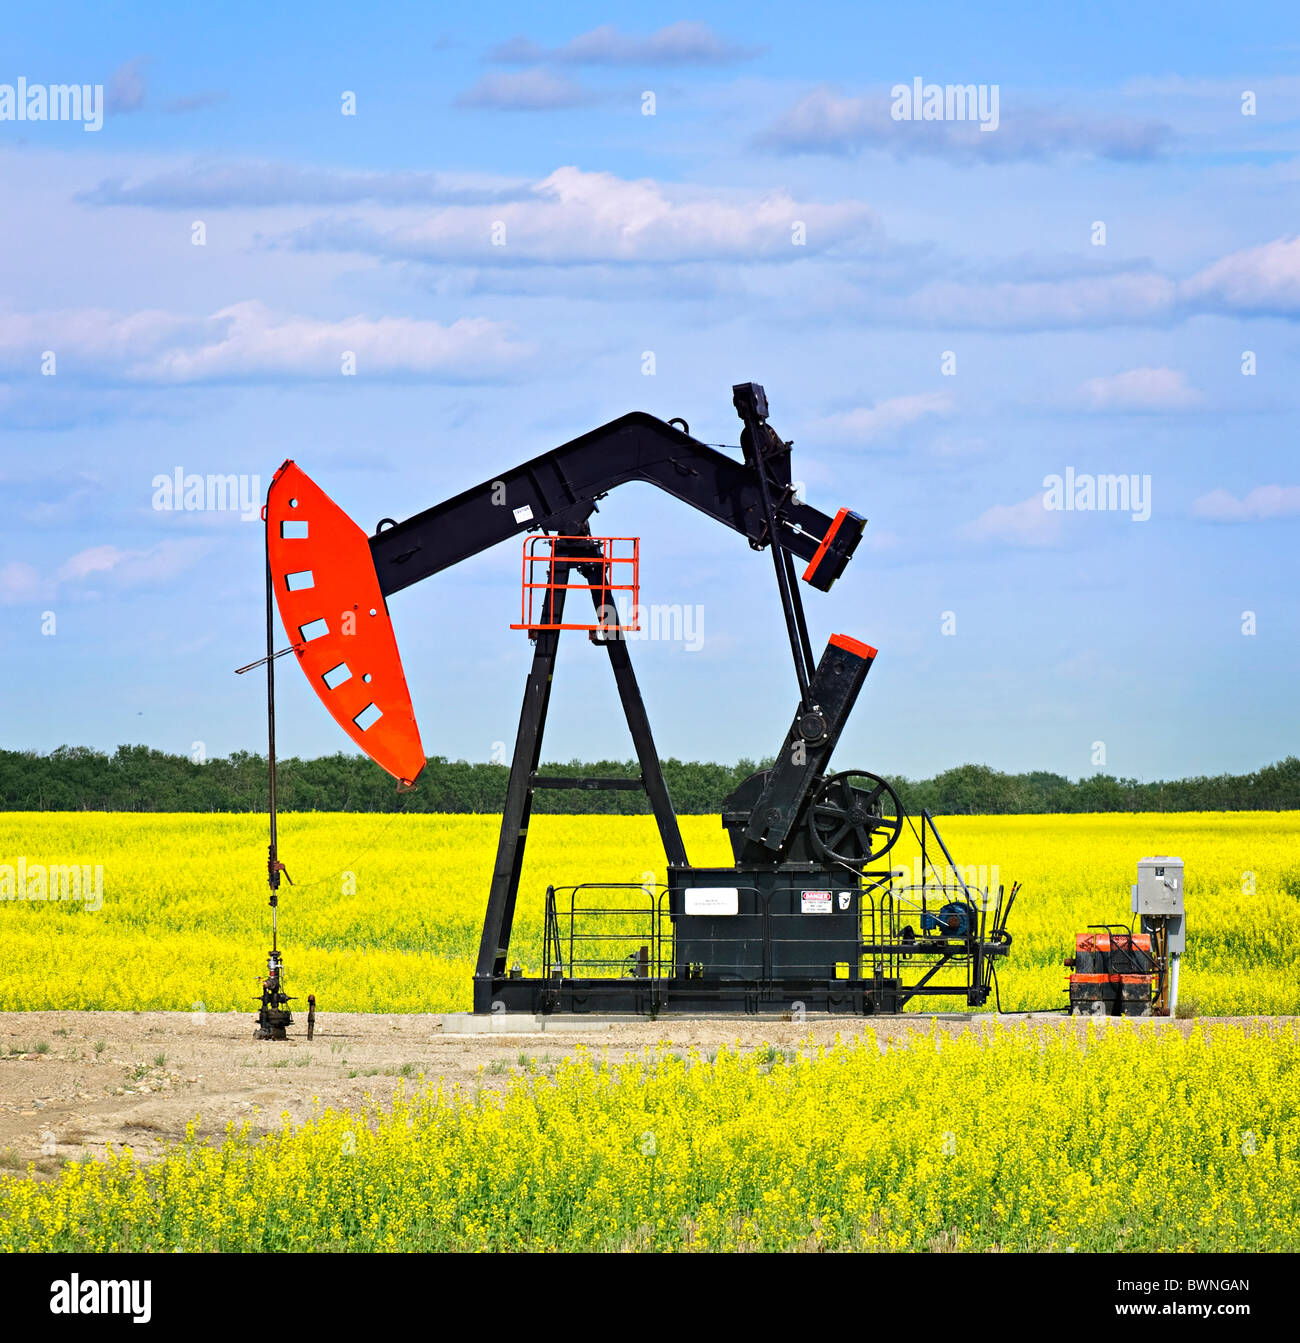 Oil pumpjack or nodding horse pumping unit in Saskatchewan prairies, Canada Stock Photo